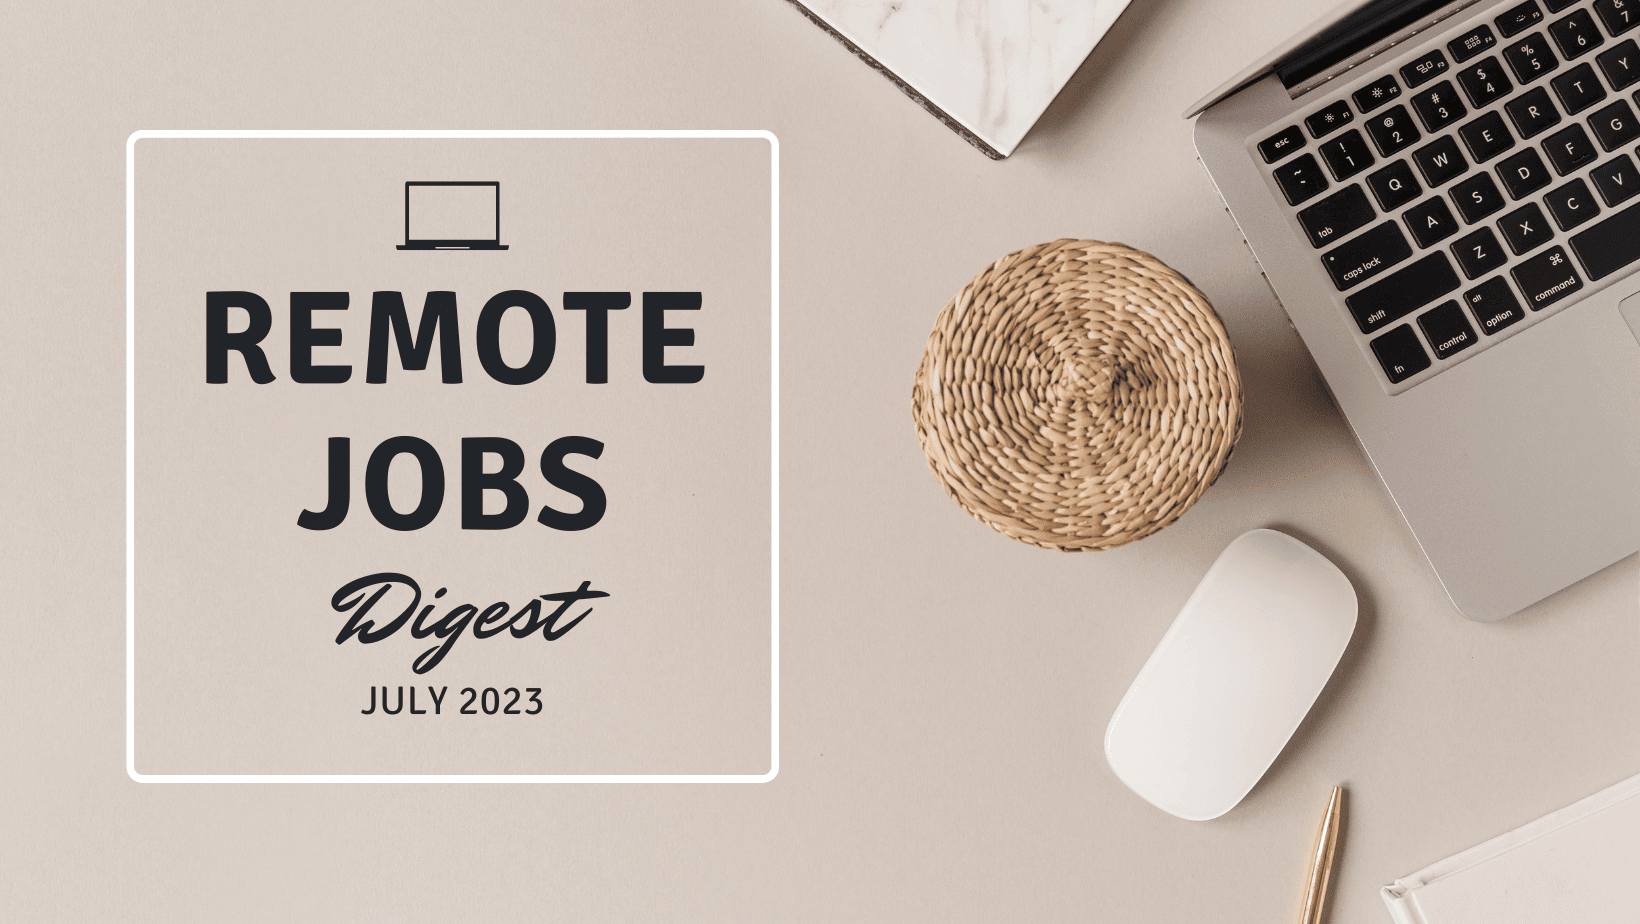 Remote Jobs Digest July 2023